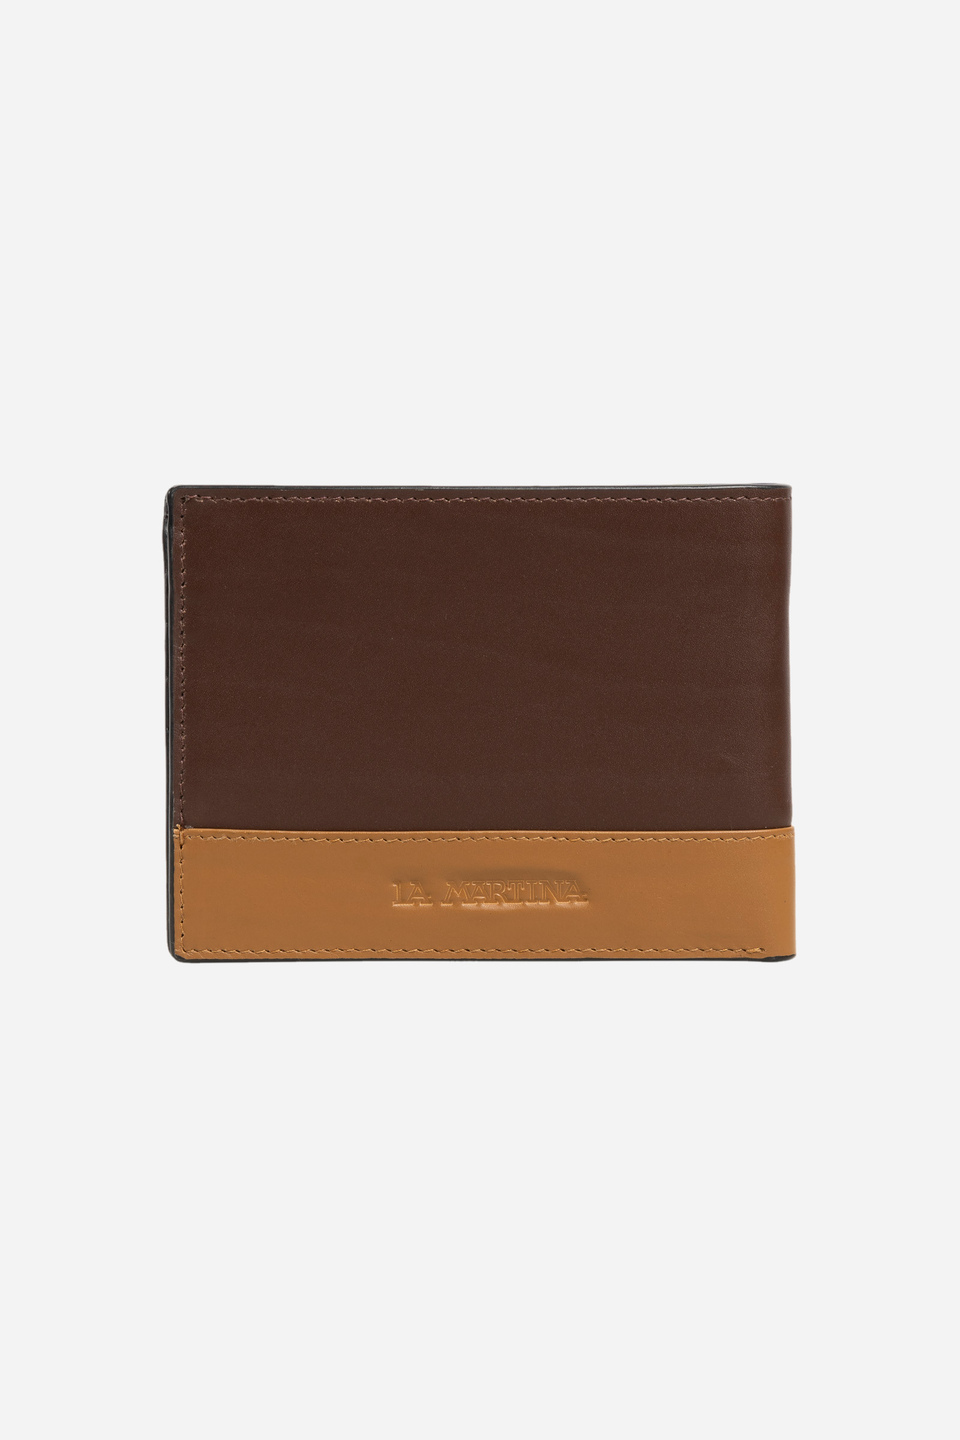 Herren-Brieftasche aus Leder | La Martina - Official Online Shop